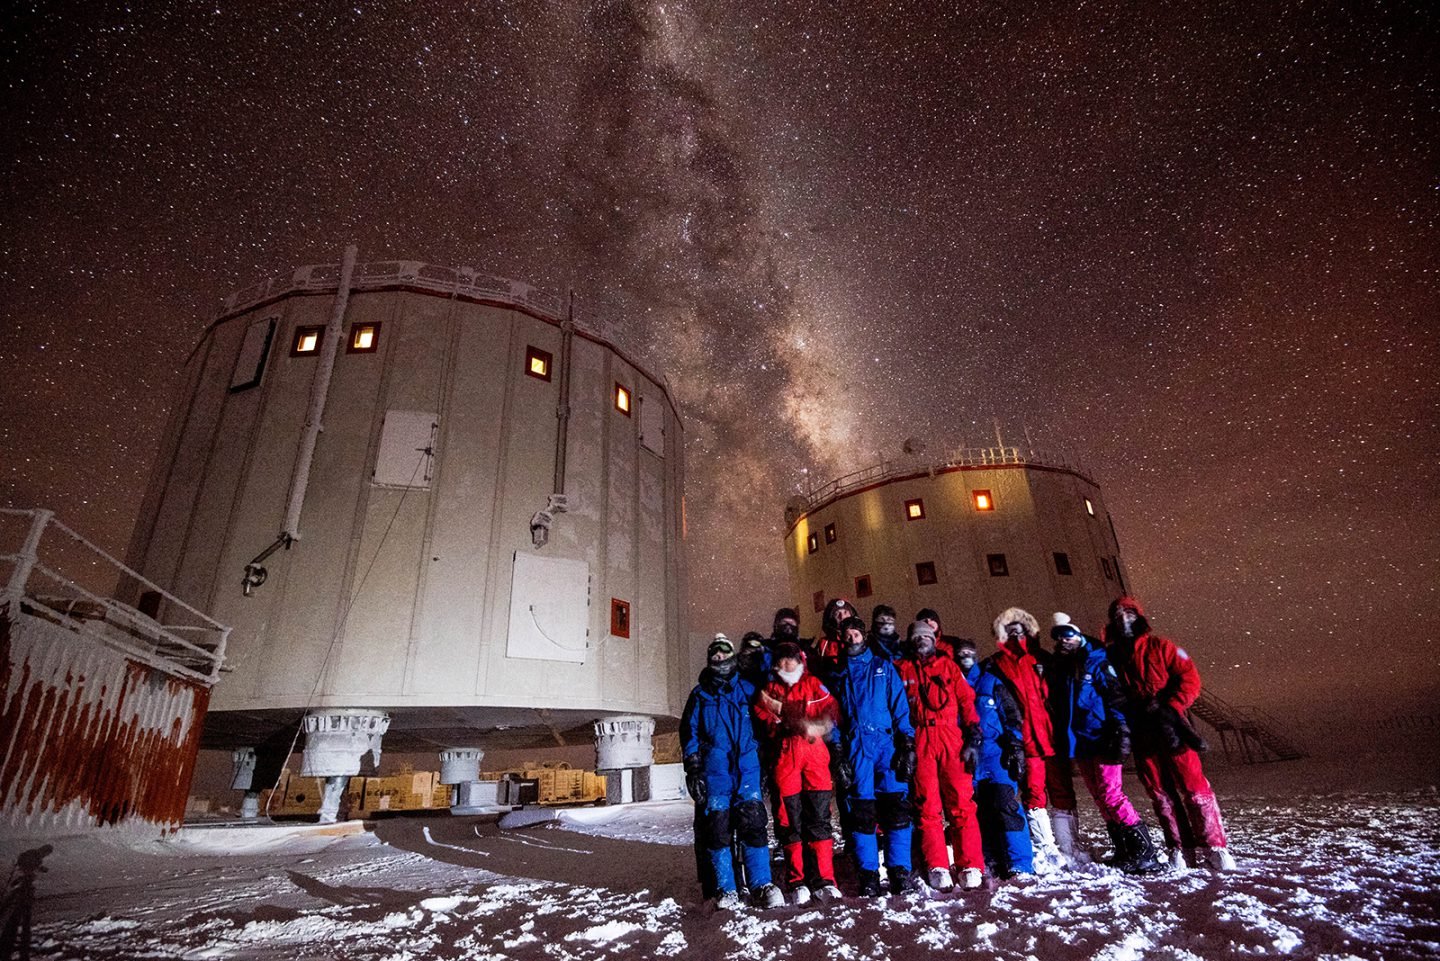 L’équipe de 2014-2015 de la base antarctique Concordia